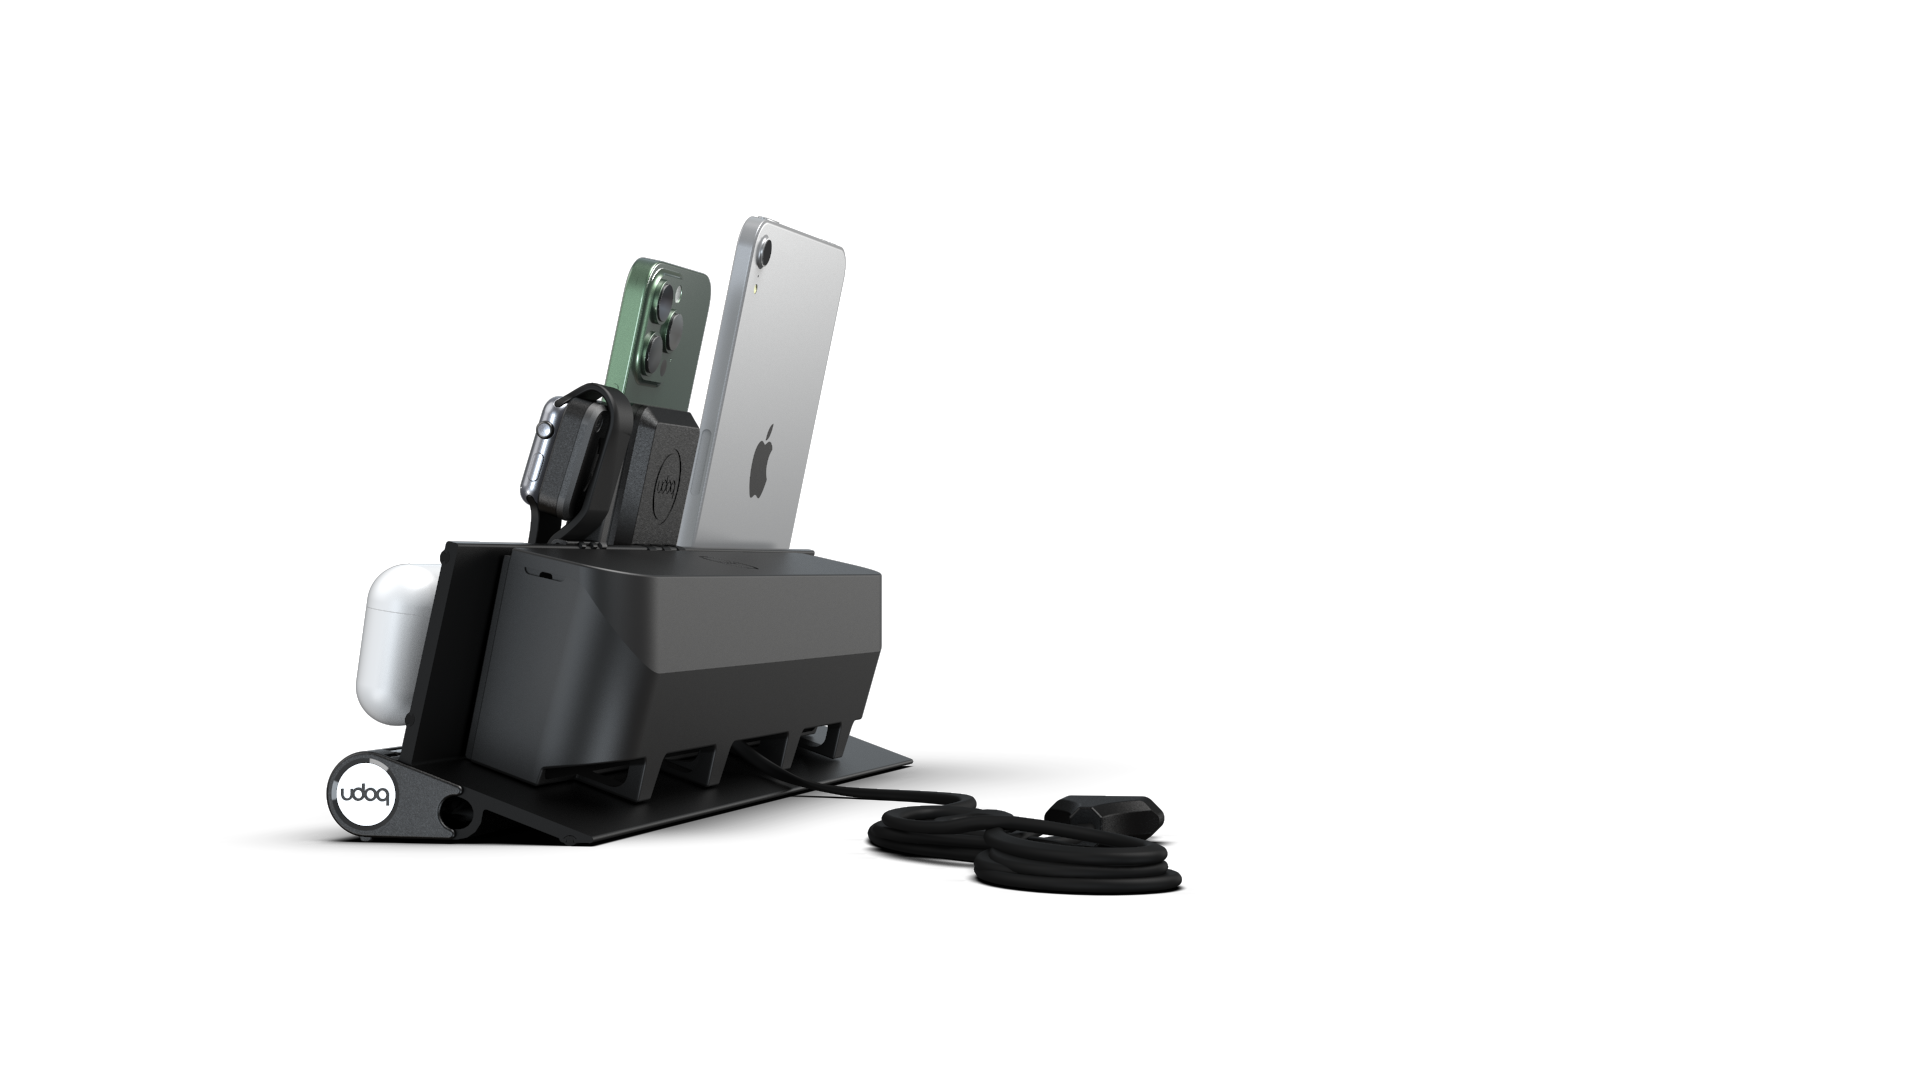 udoq 400 Multiladestation in Schwarz mit MagSafe und Power Delivery Charger, Apple Watch Adapter